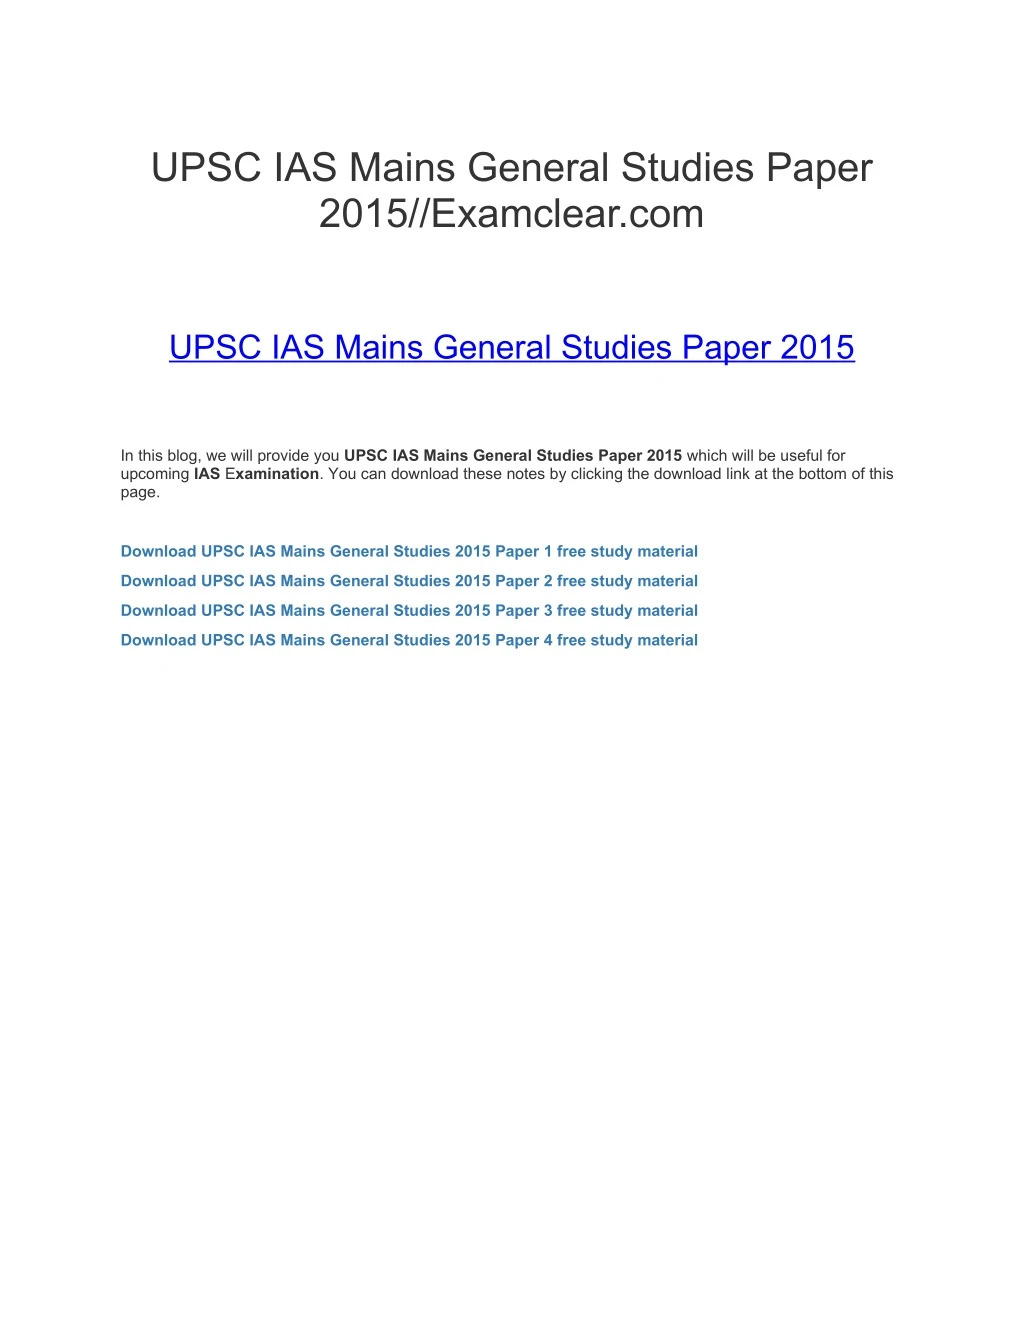 upsc ias mains general studies paper 2015